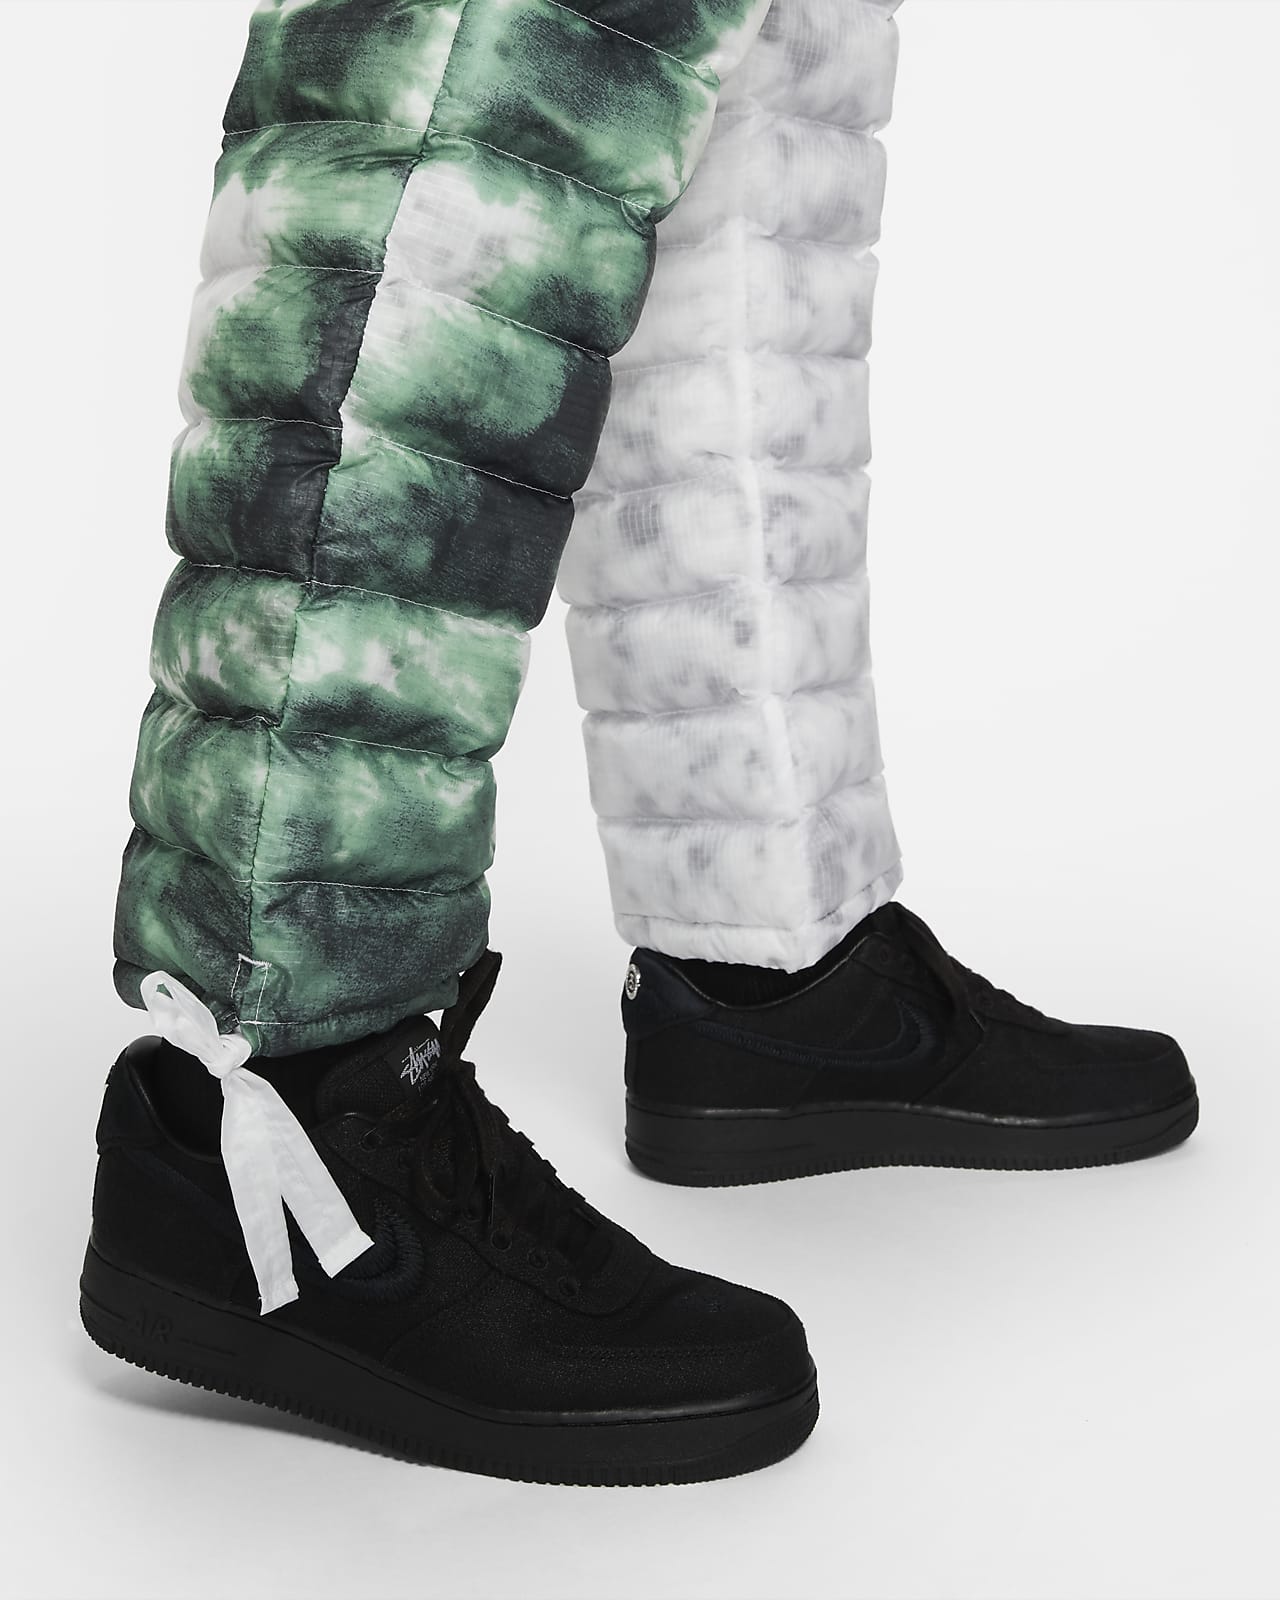 Nike x Stüssy Insulated Pants